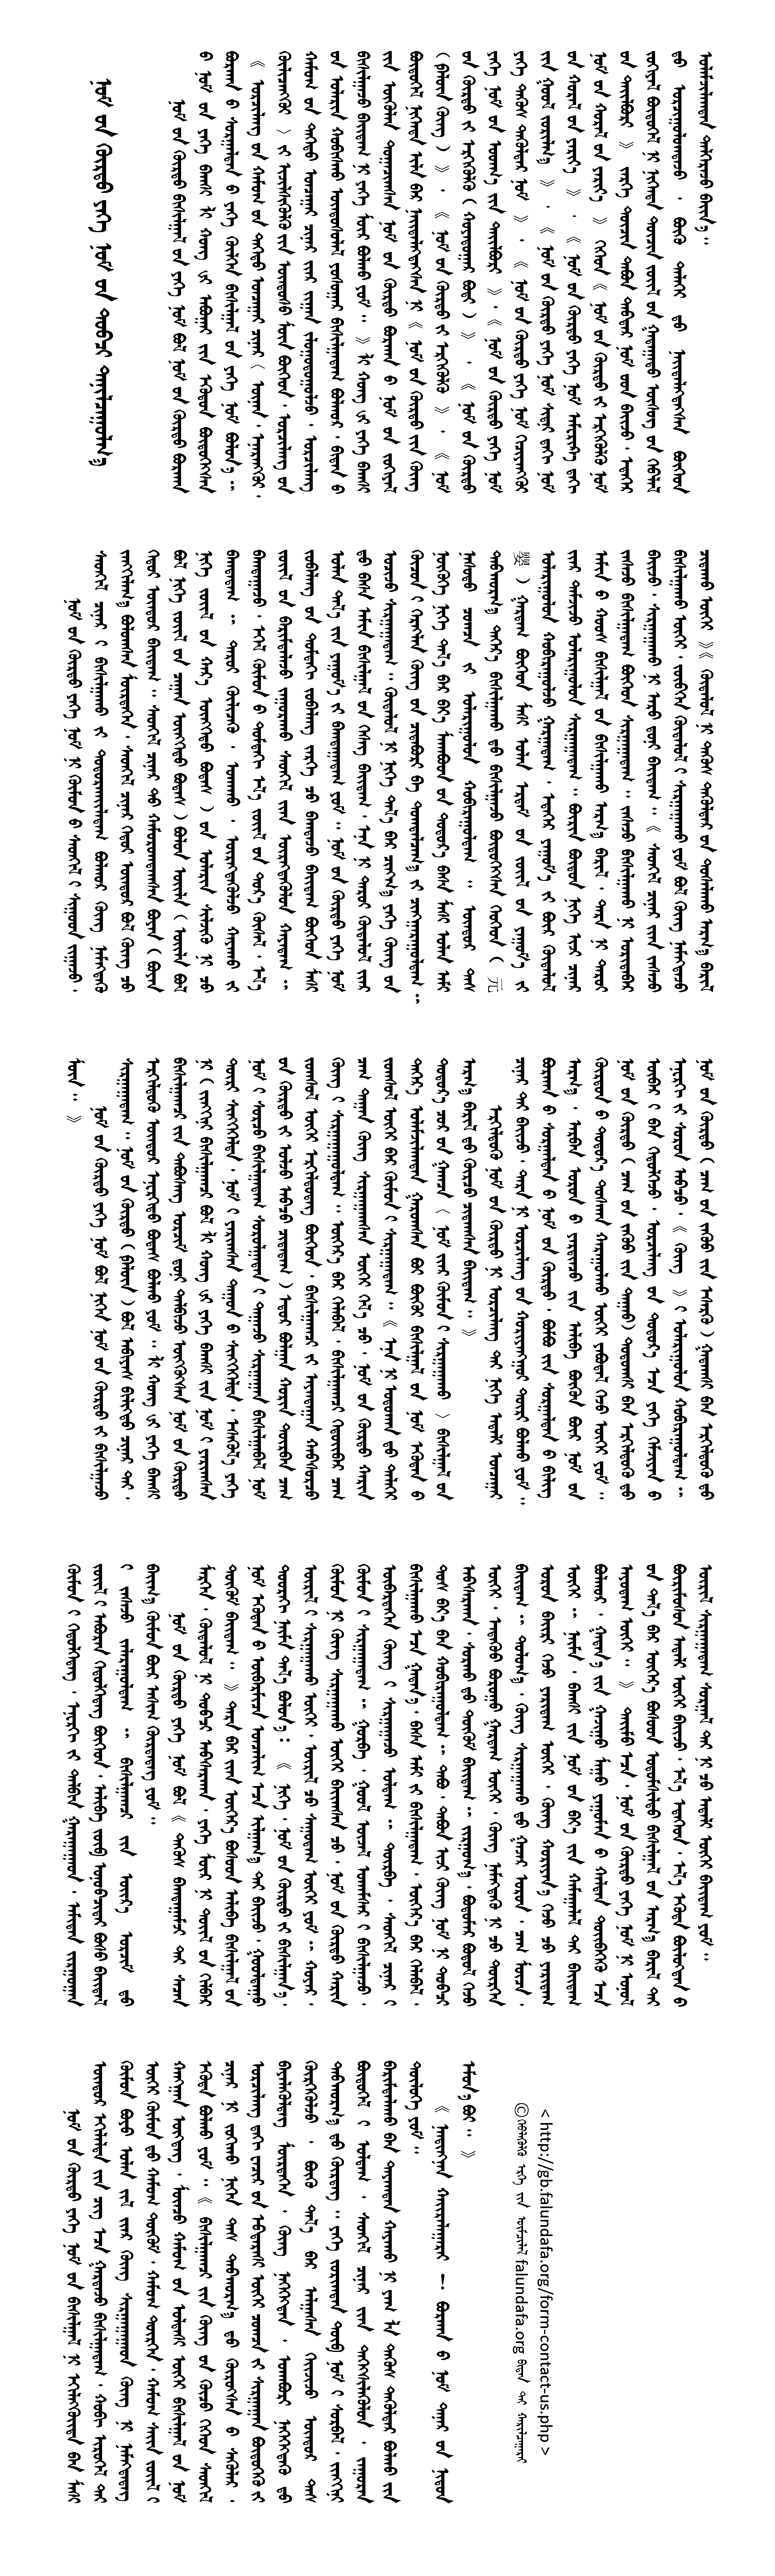 Introduction to Falun Dafa in Mongolian script